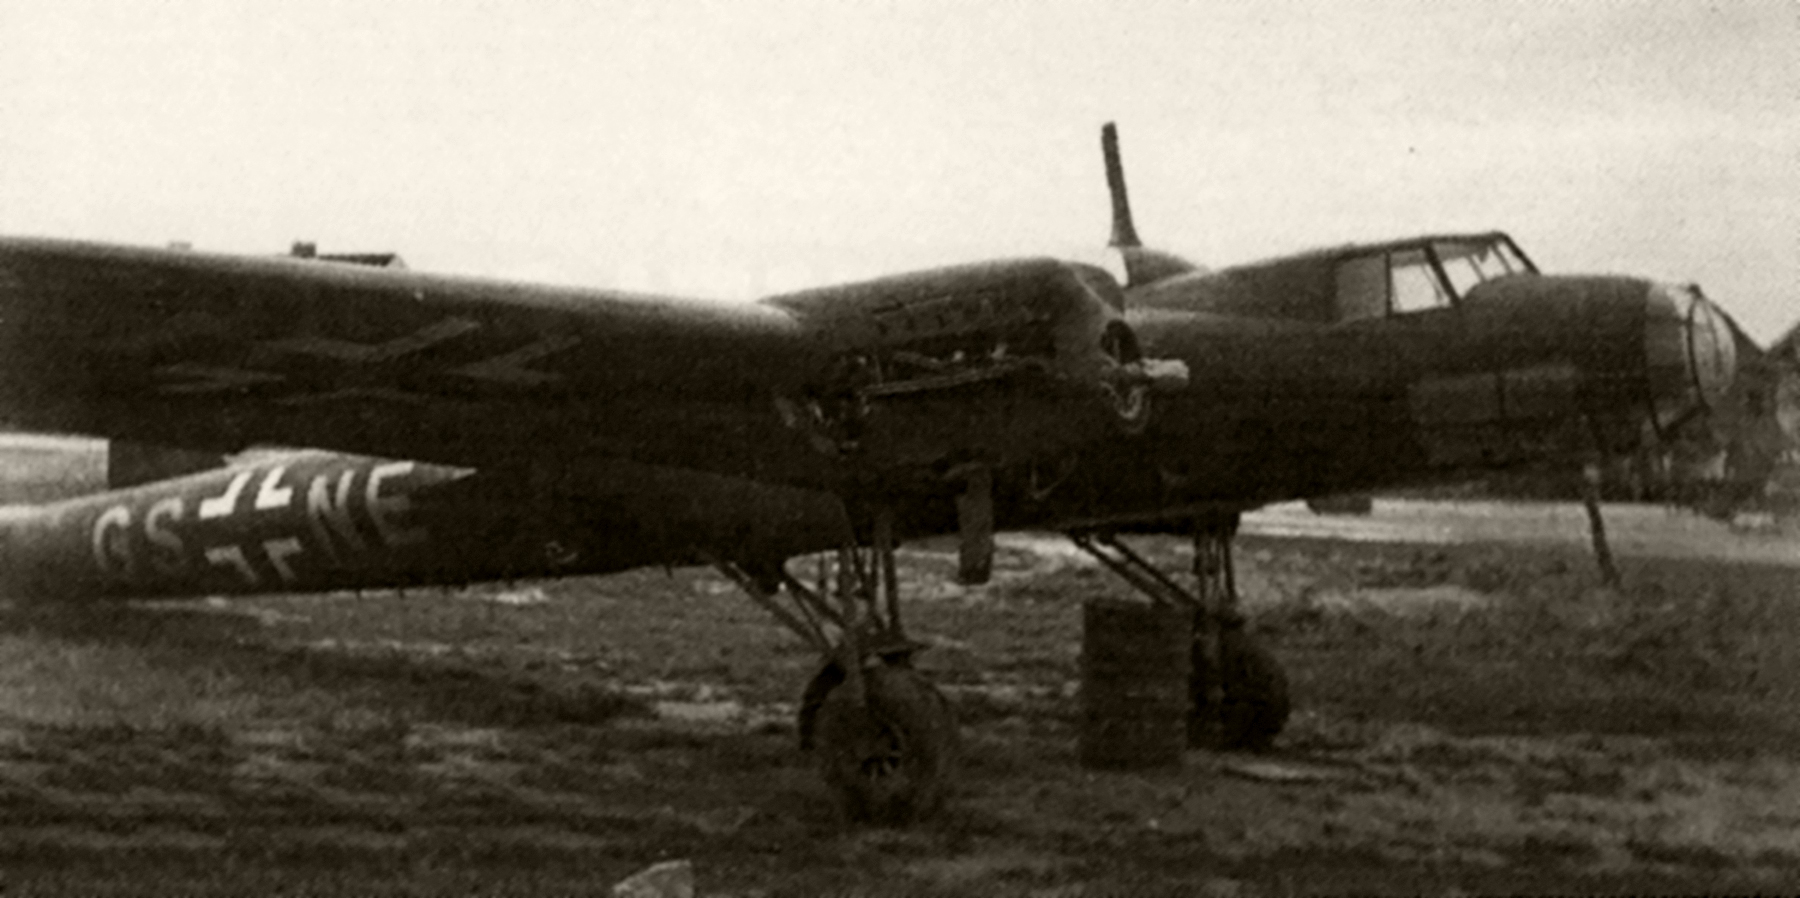 Dornier Do 17E Stkz GS+NE used as a trainer probably NJG1 01